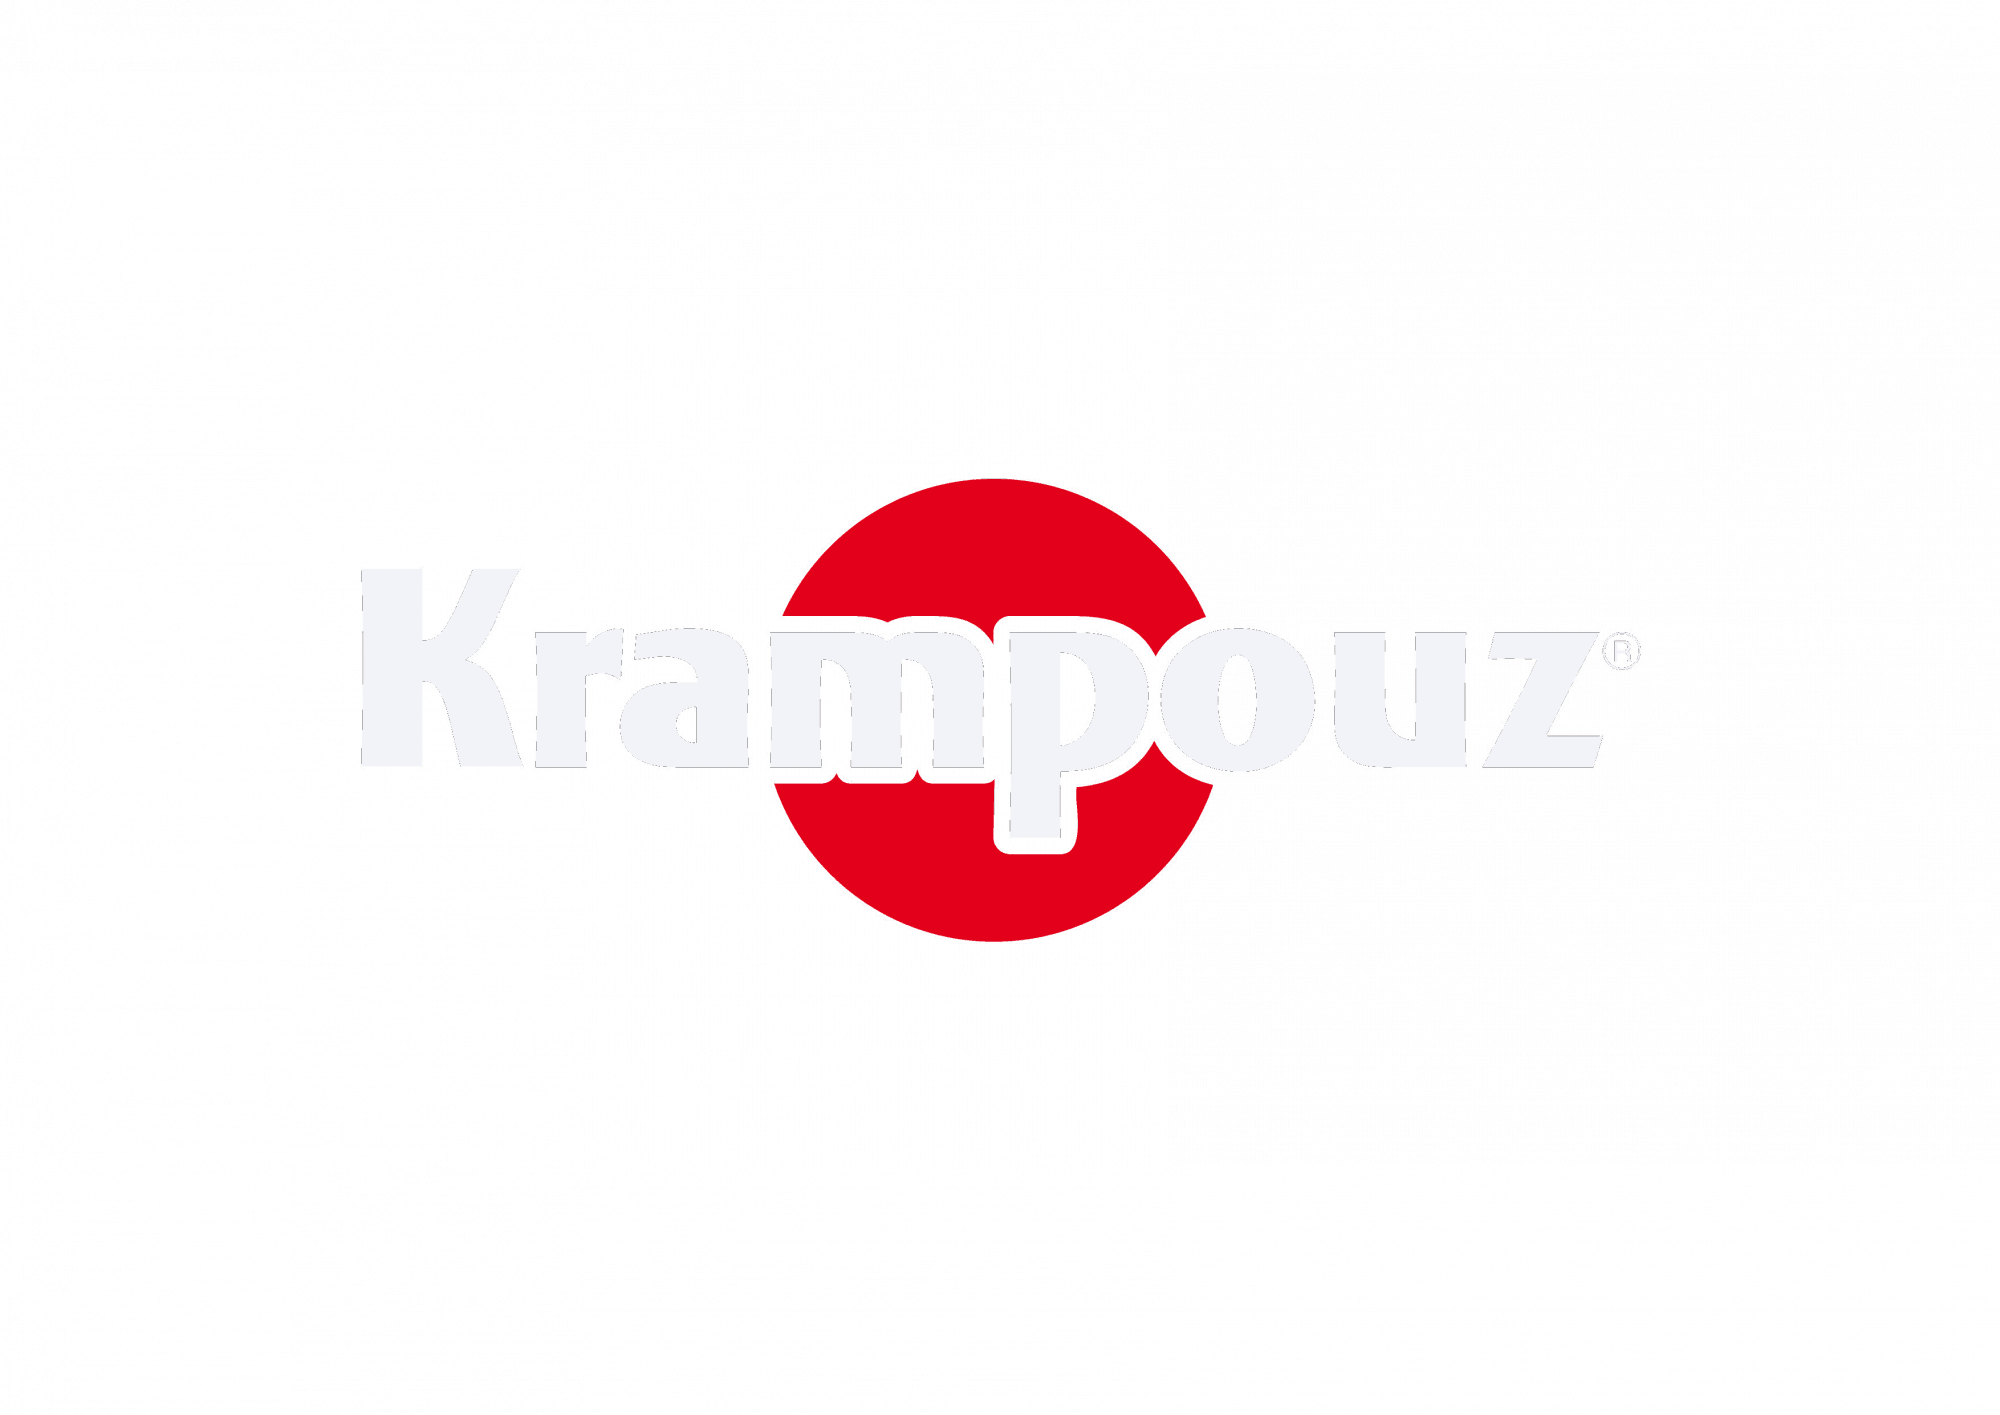 Krampouz logo